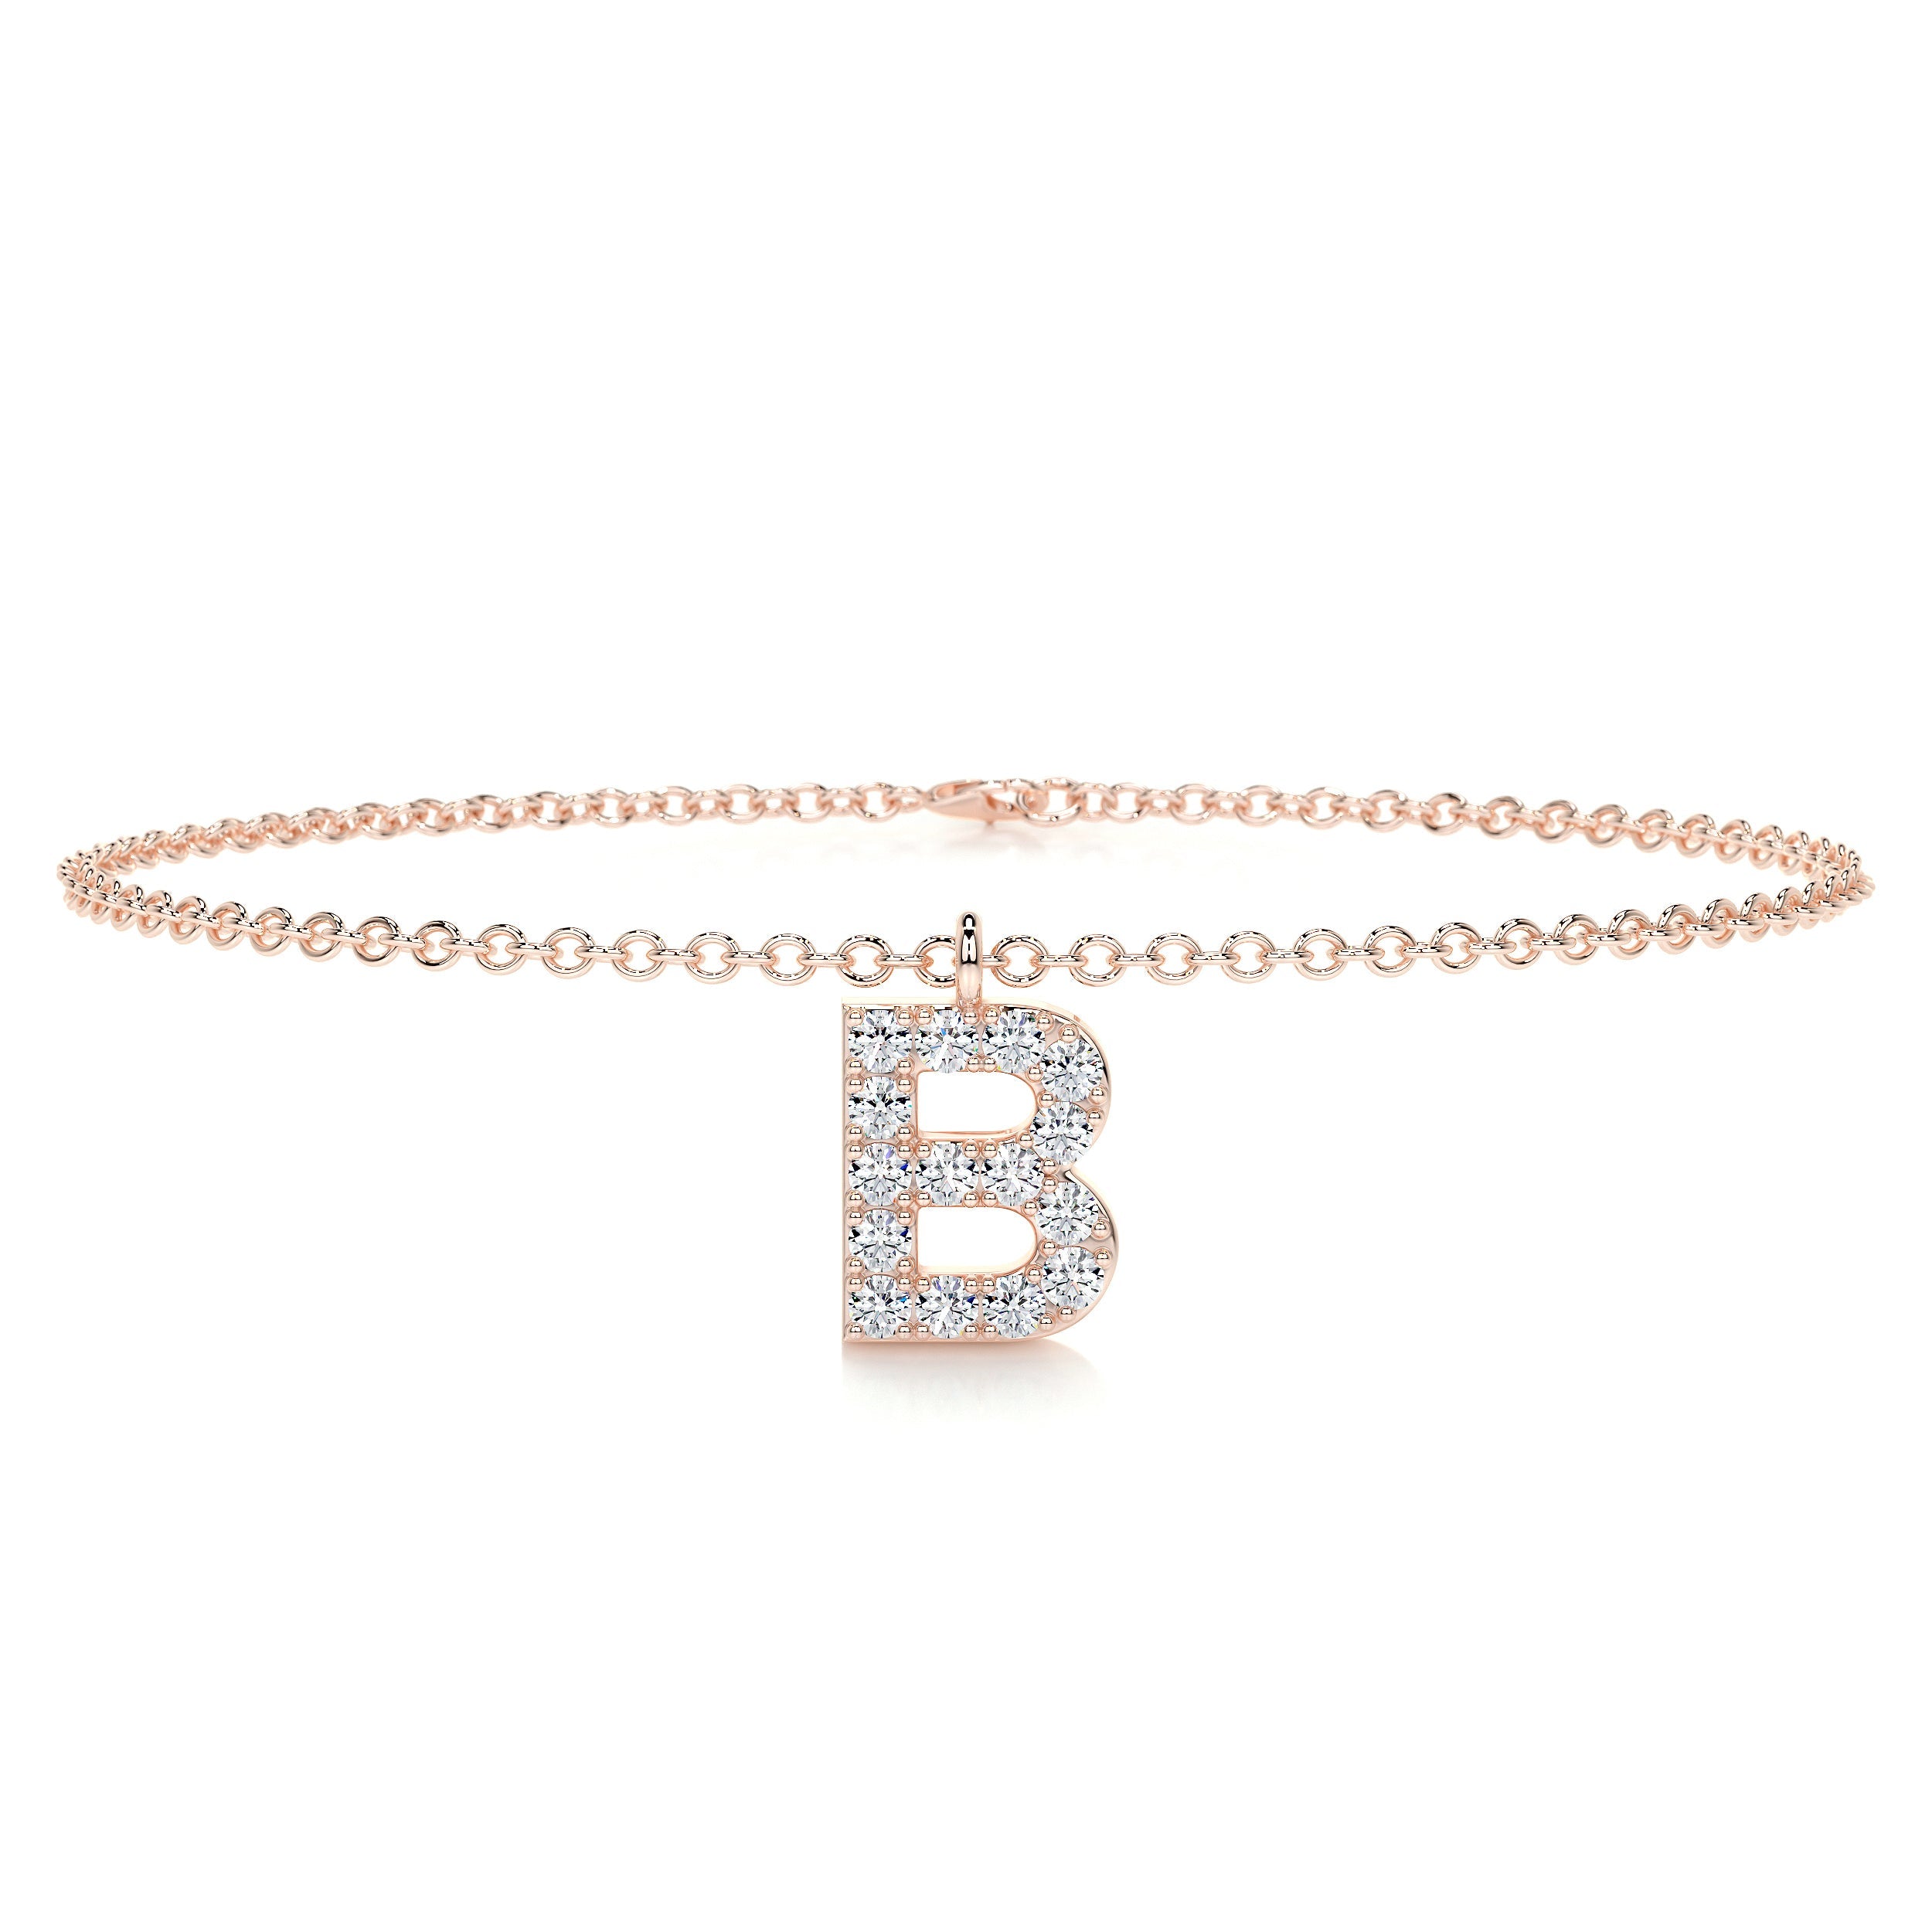 Barbara Letter Lab Grown Diamonds Bracelet   (0.15 Carat) -14K Rose Gold